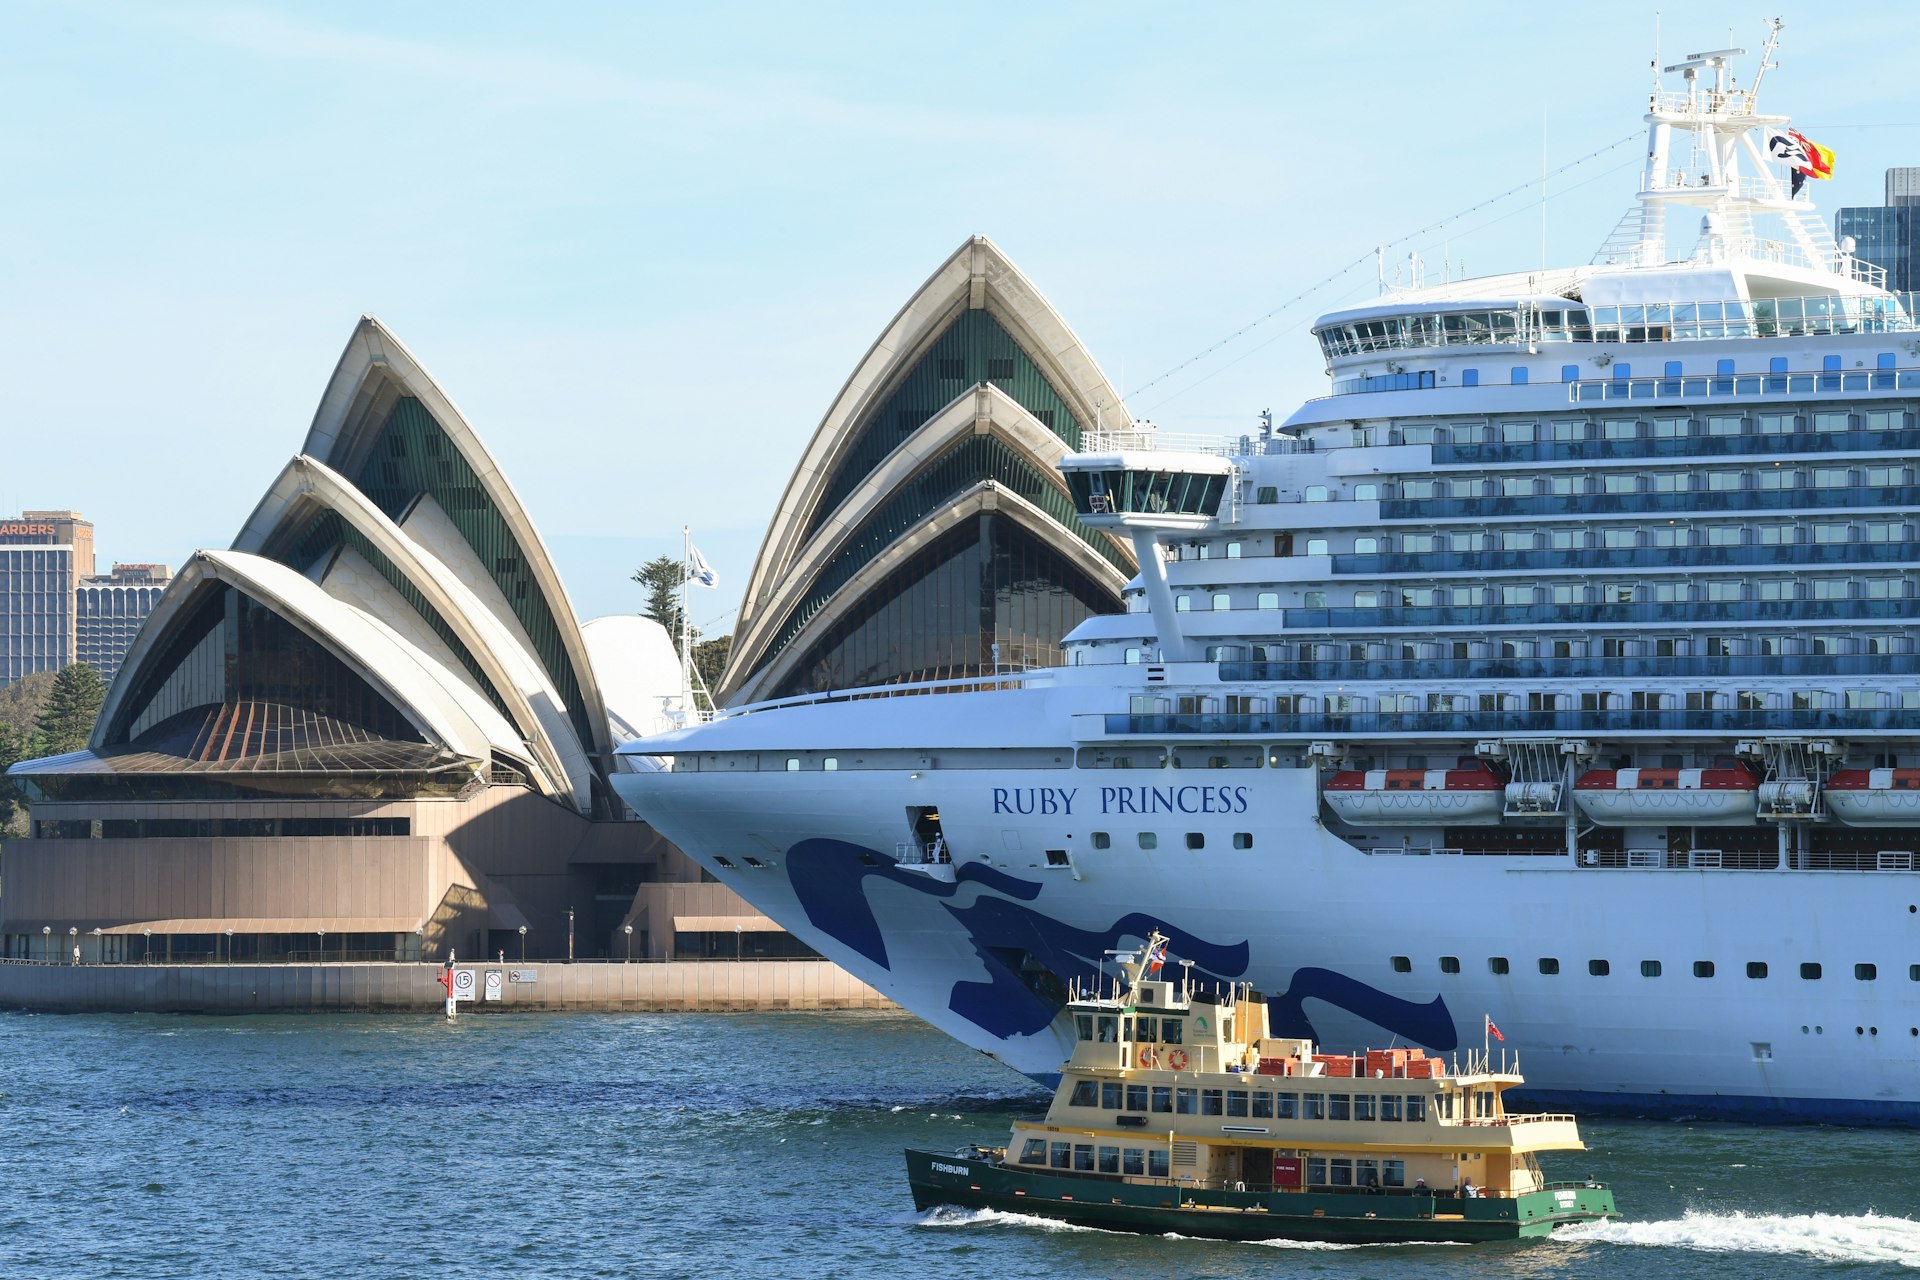 Ruby Princess Cruise ship departs Sydney, Australia